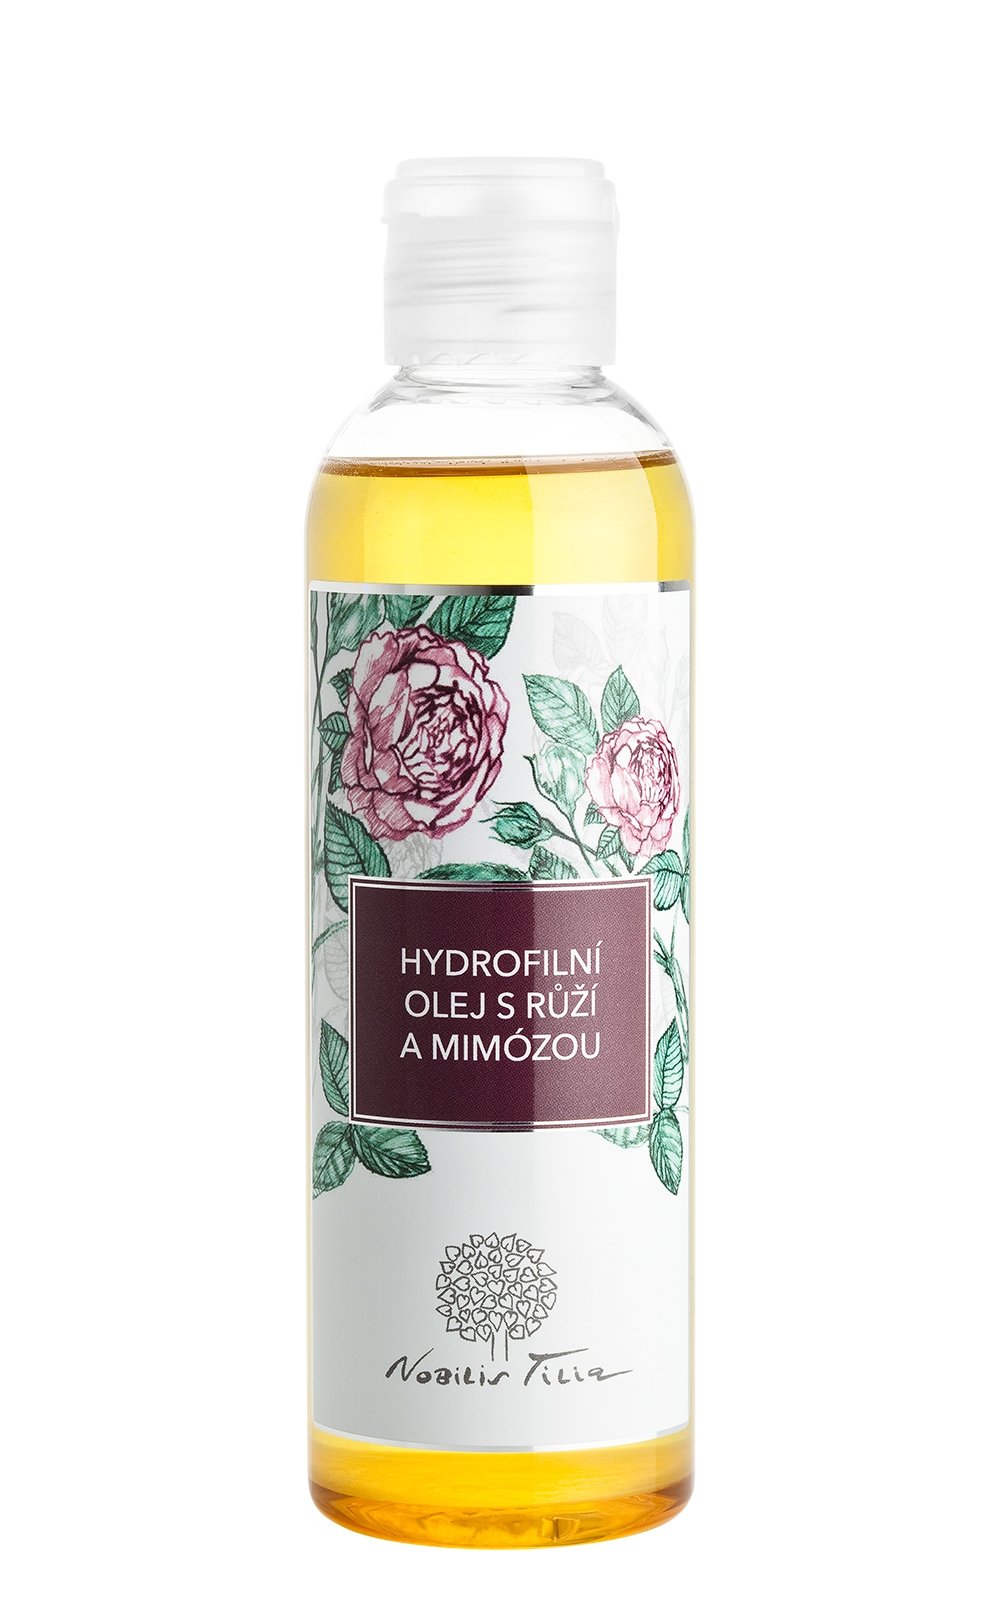 Hydrofilní olej s Růží a mimózou